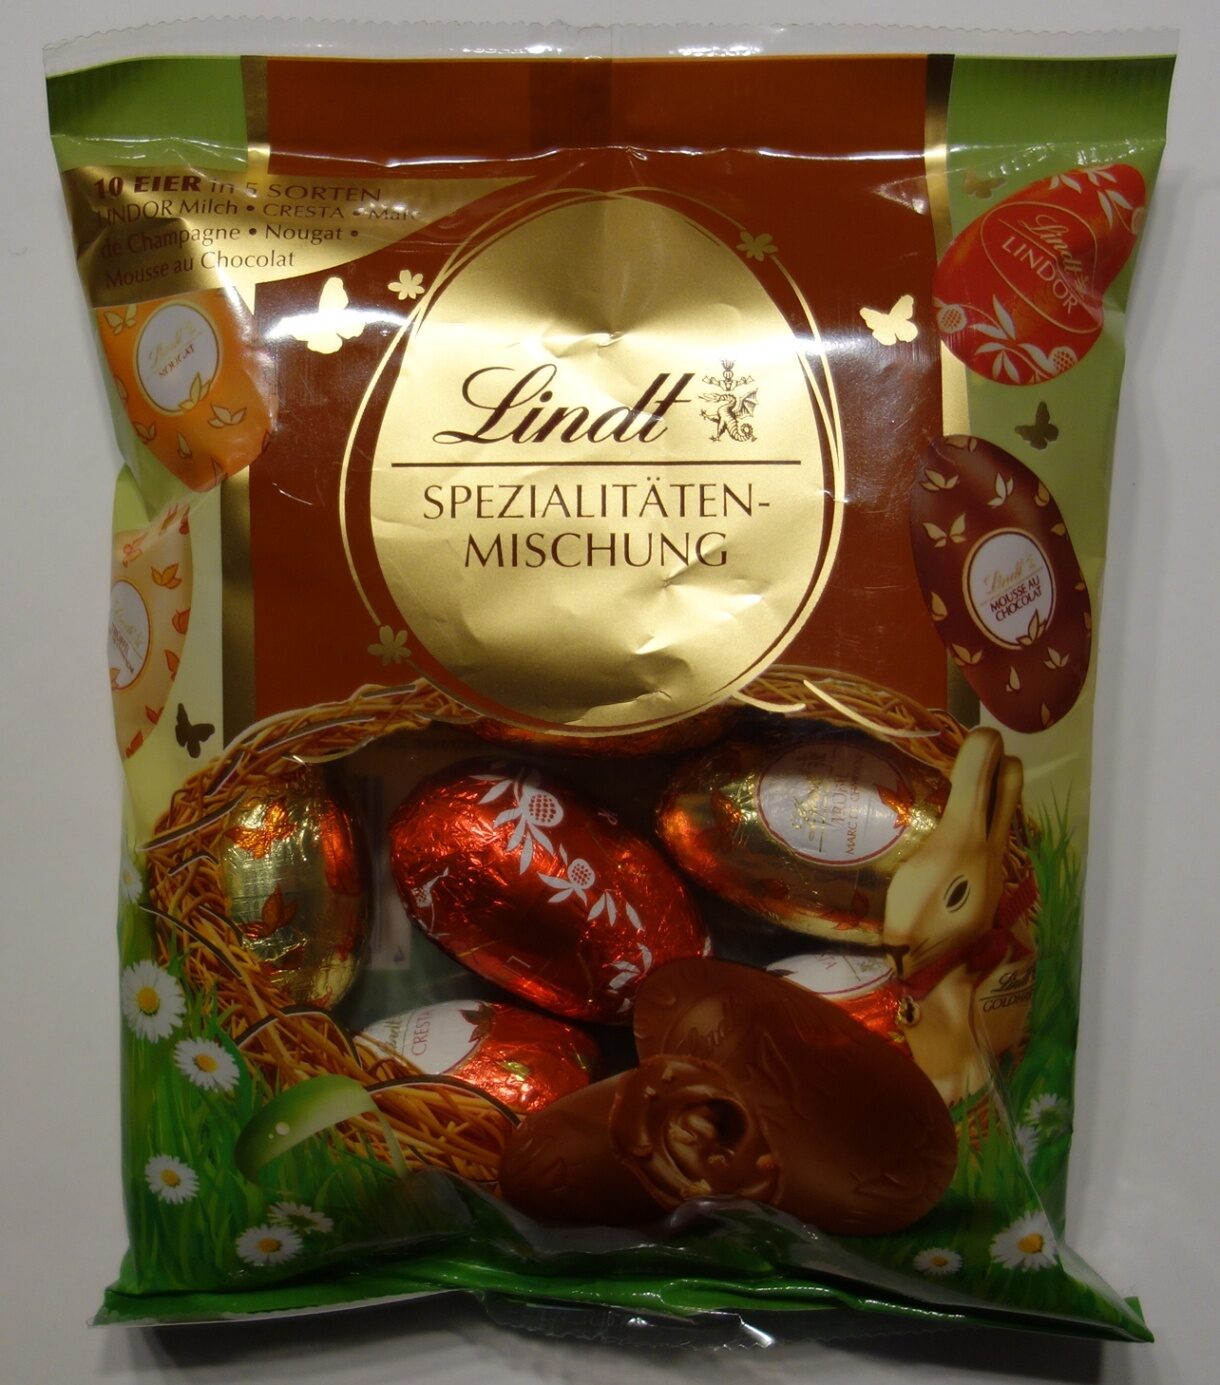 Lindt Spezialitäten-Mischung gefüllte Schokoladeneier - Product - de